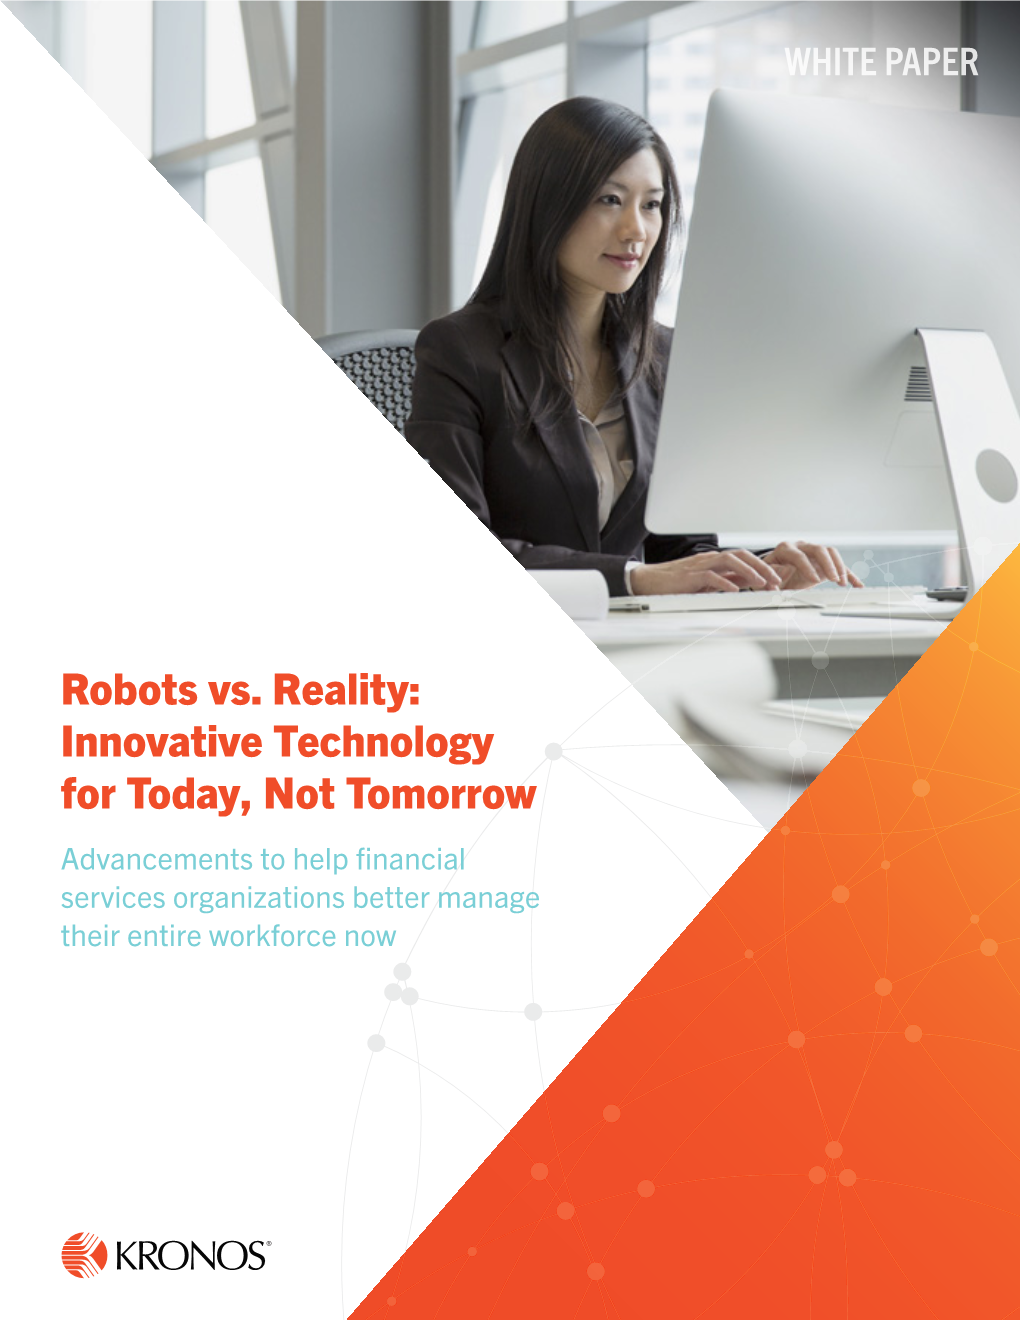 Robots Vs. Reality: Innovative Technology for Today, Not Tomorrow